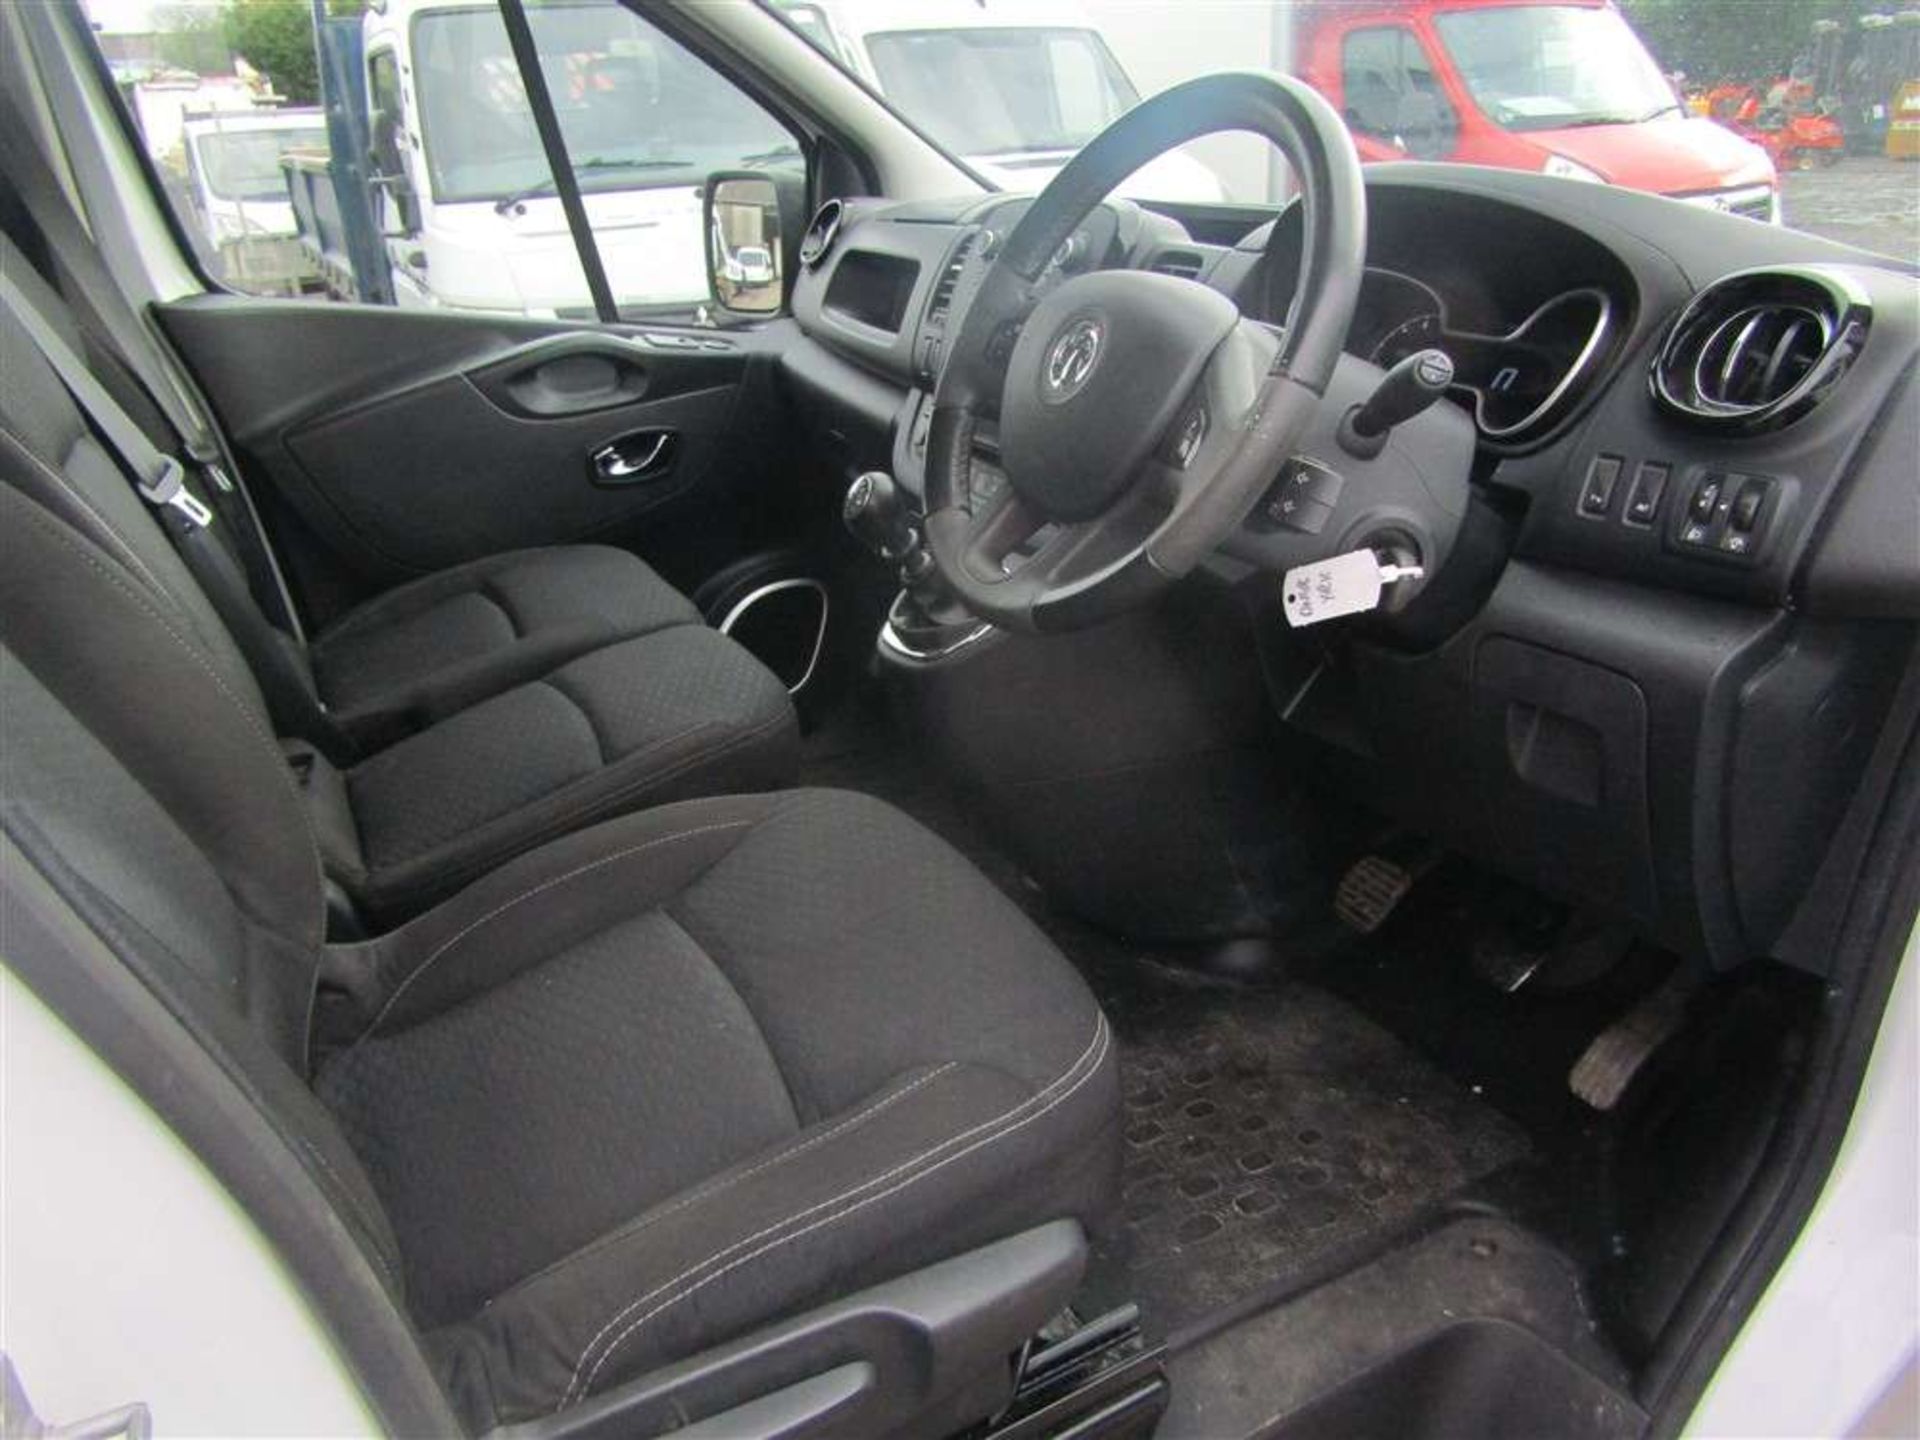 2018 68 reg Vauxhall Vivaro L2H1 2900 Sportive - Image 6 of 7